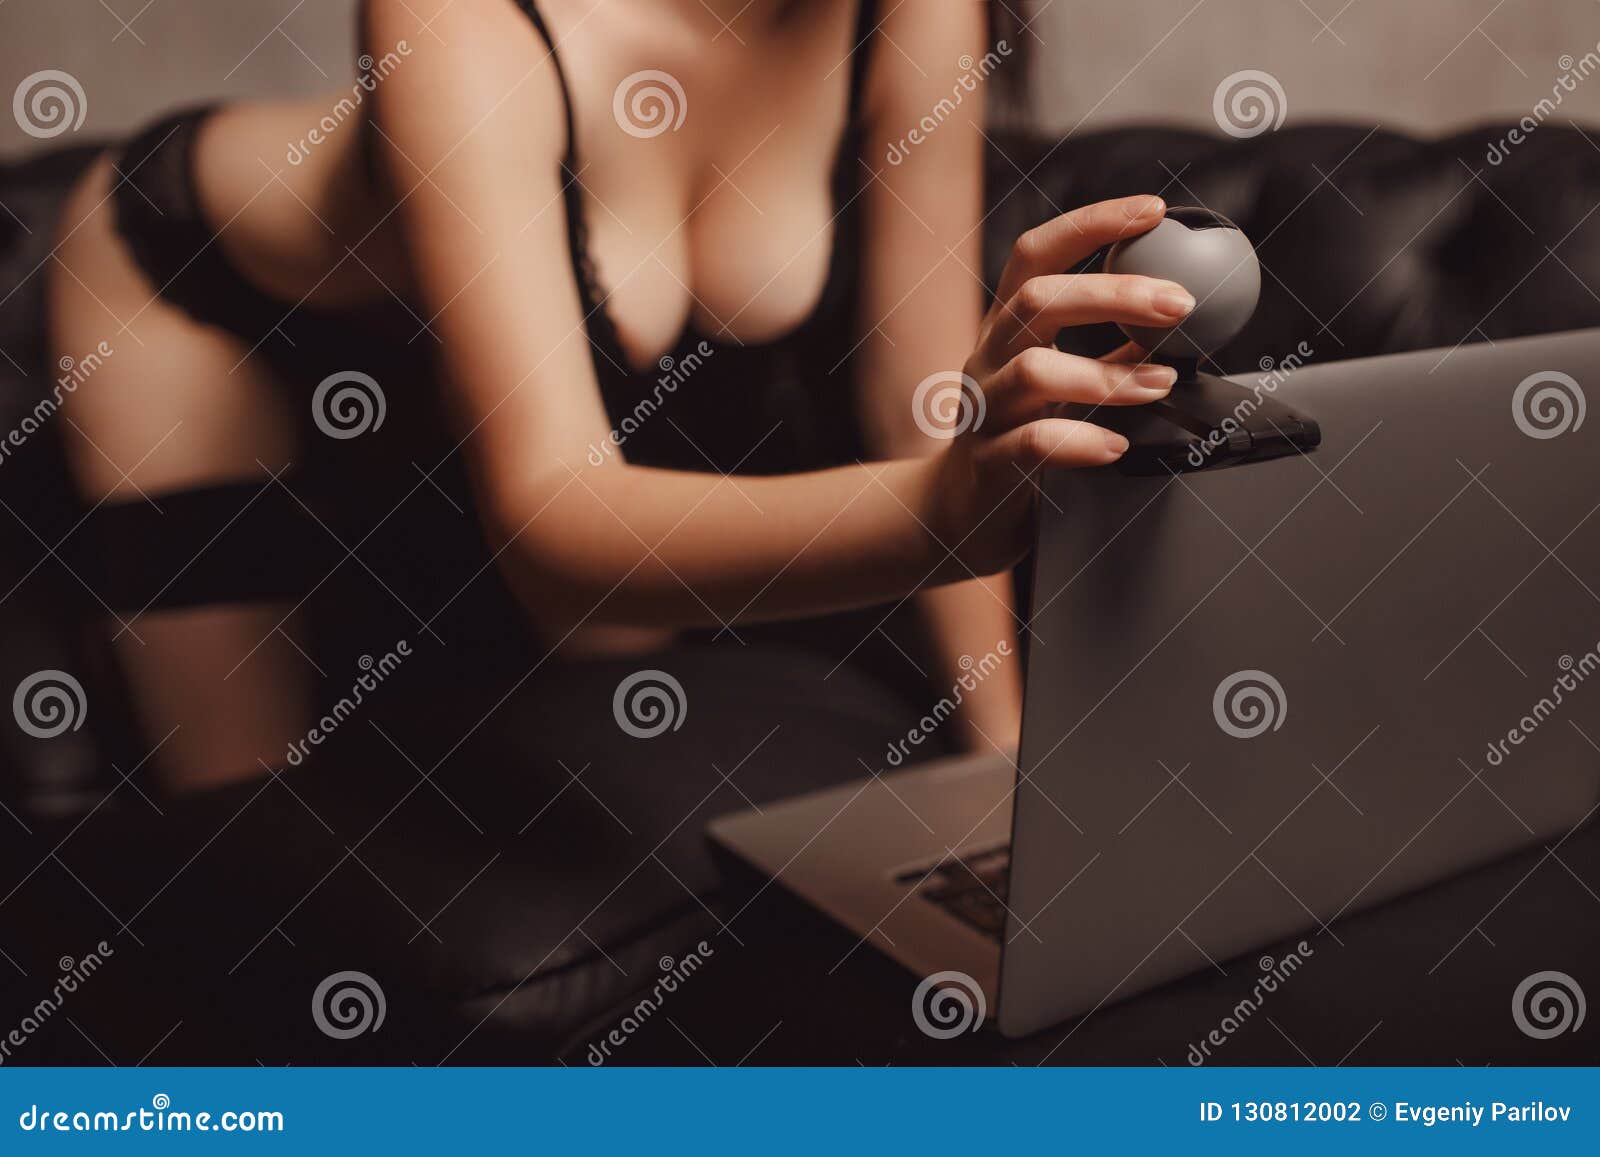 Woman Sex Online